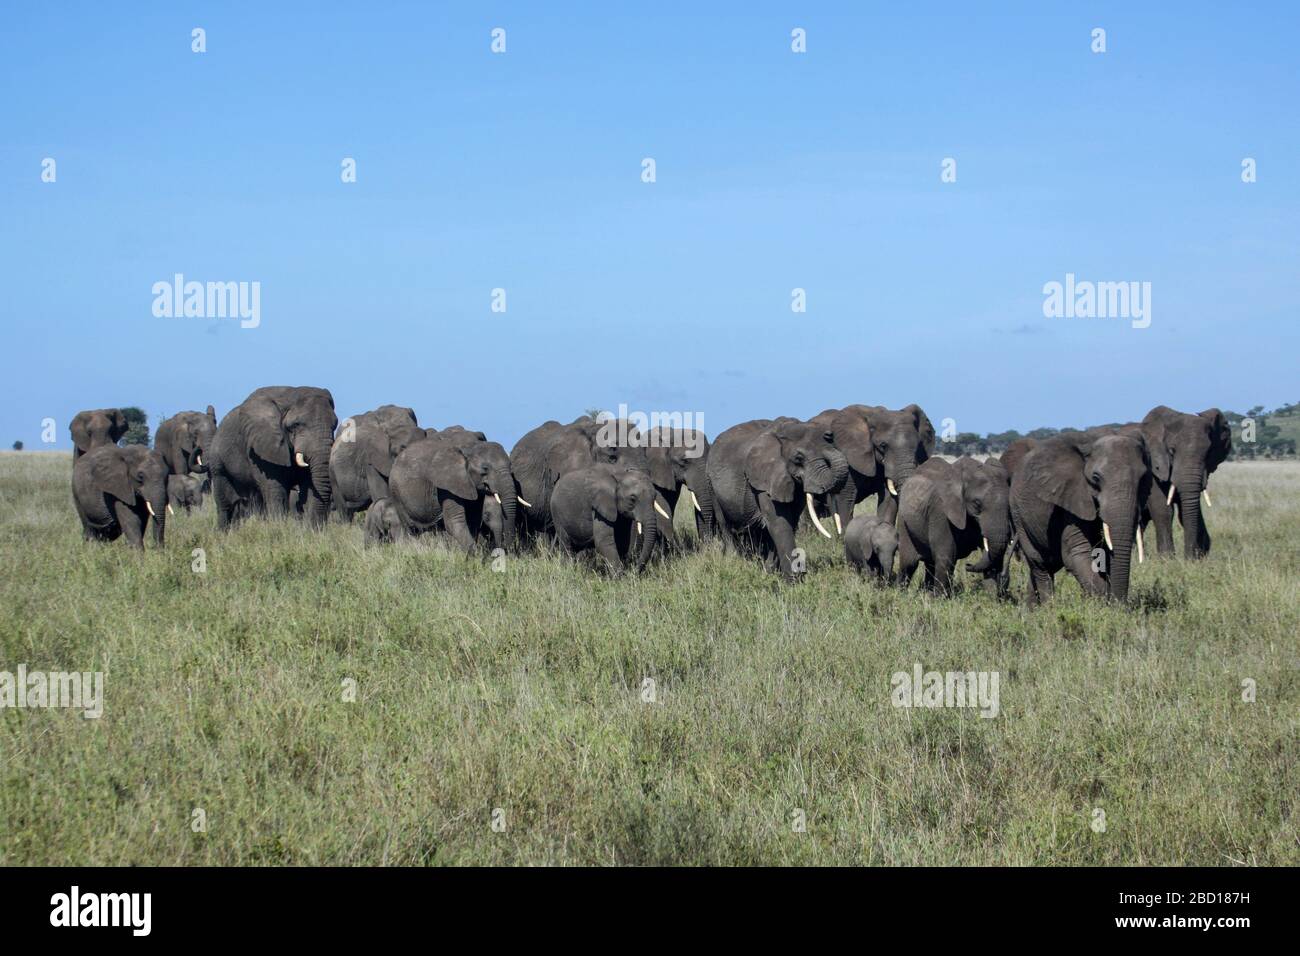 Africa, Tanzania, Parco Nazionale Serengeti un allevamento di elefanti Bush africani (Loxodonta africana) Foto Stock